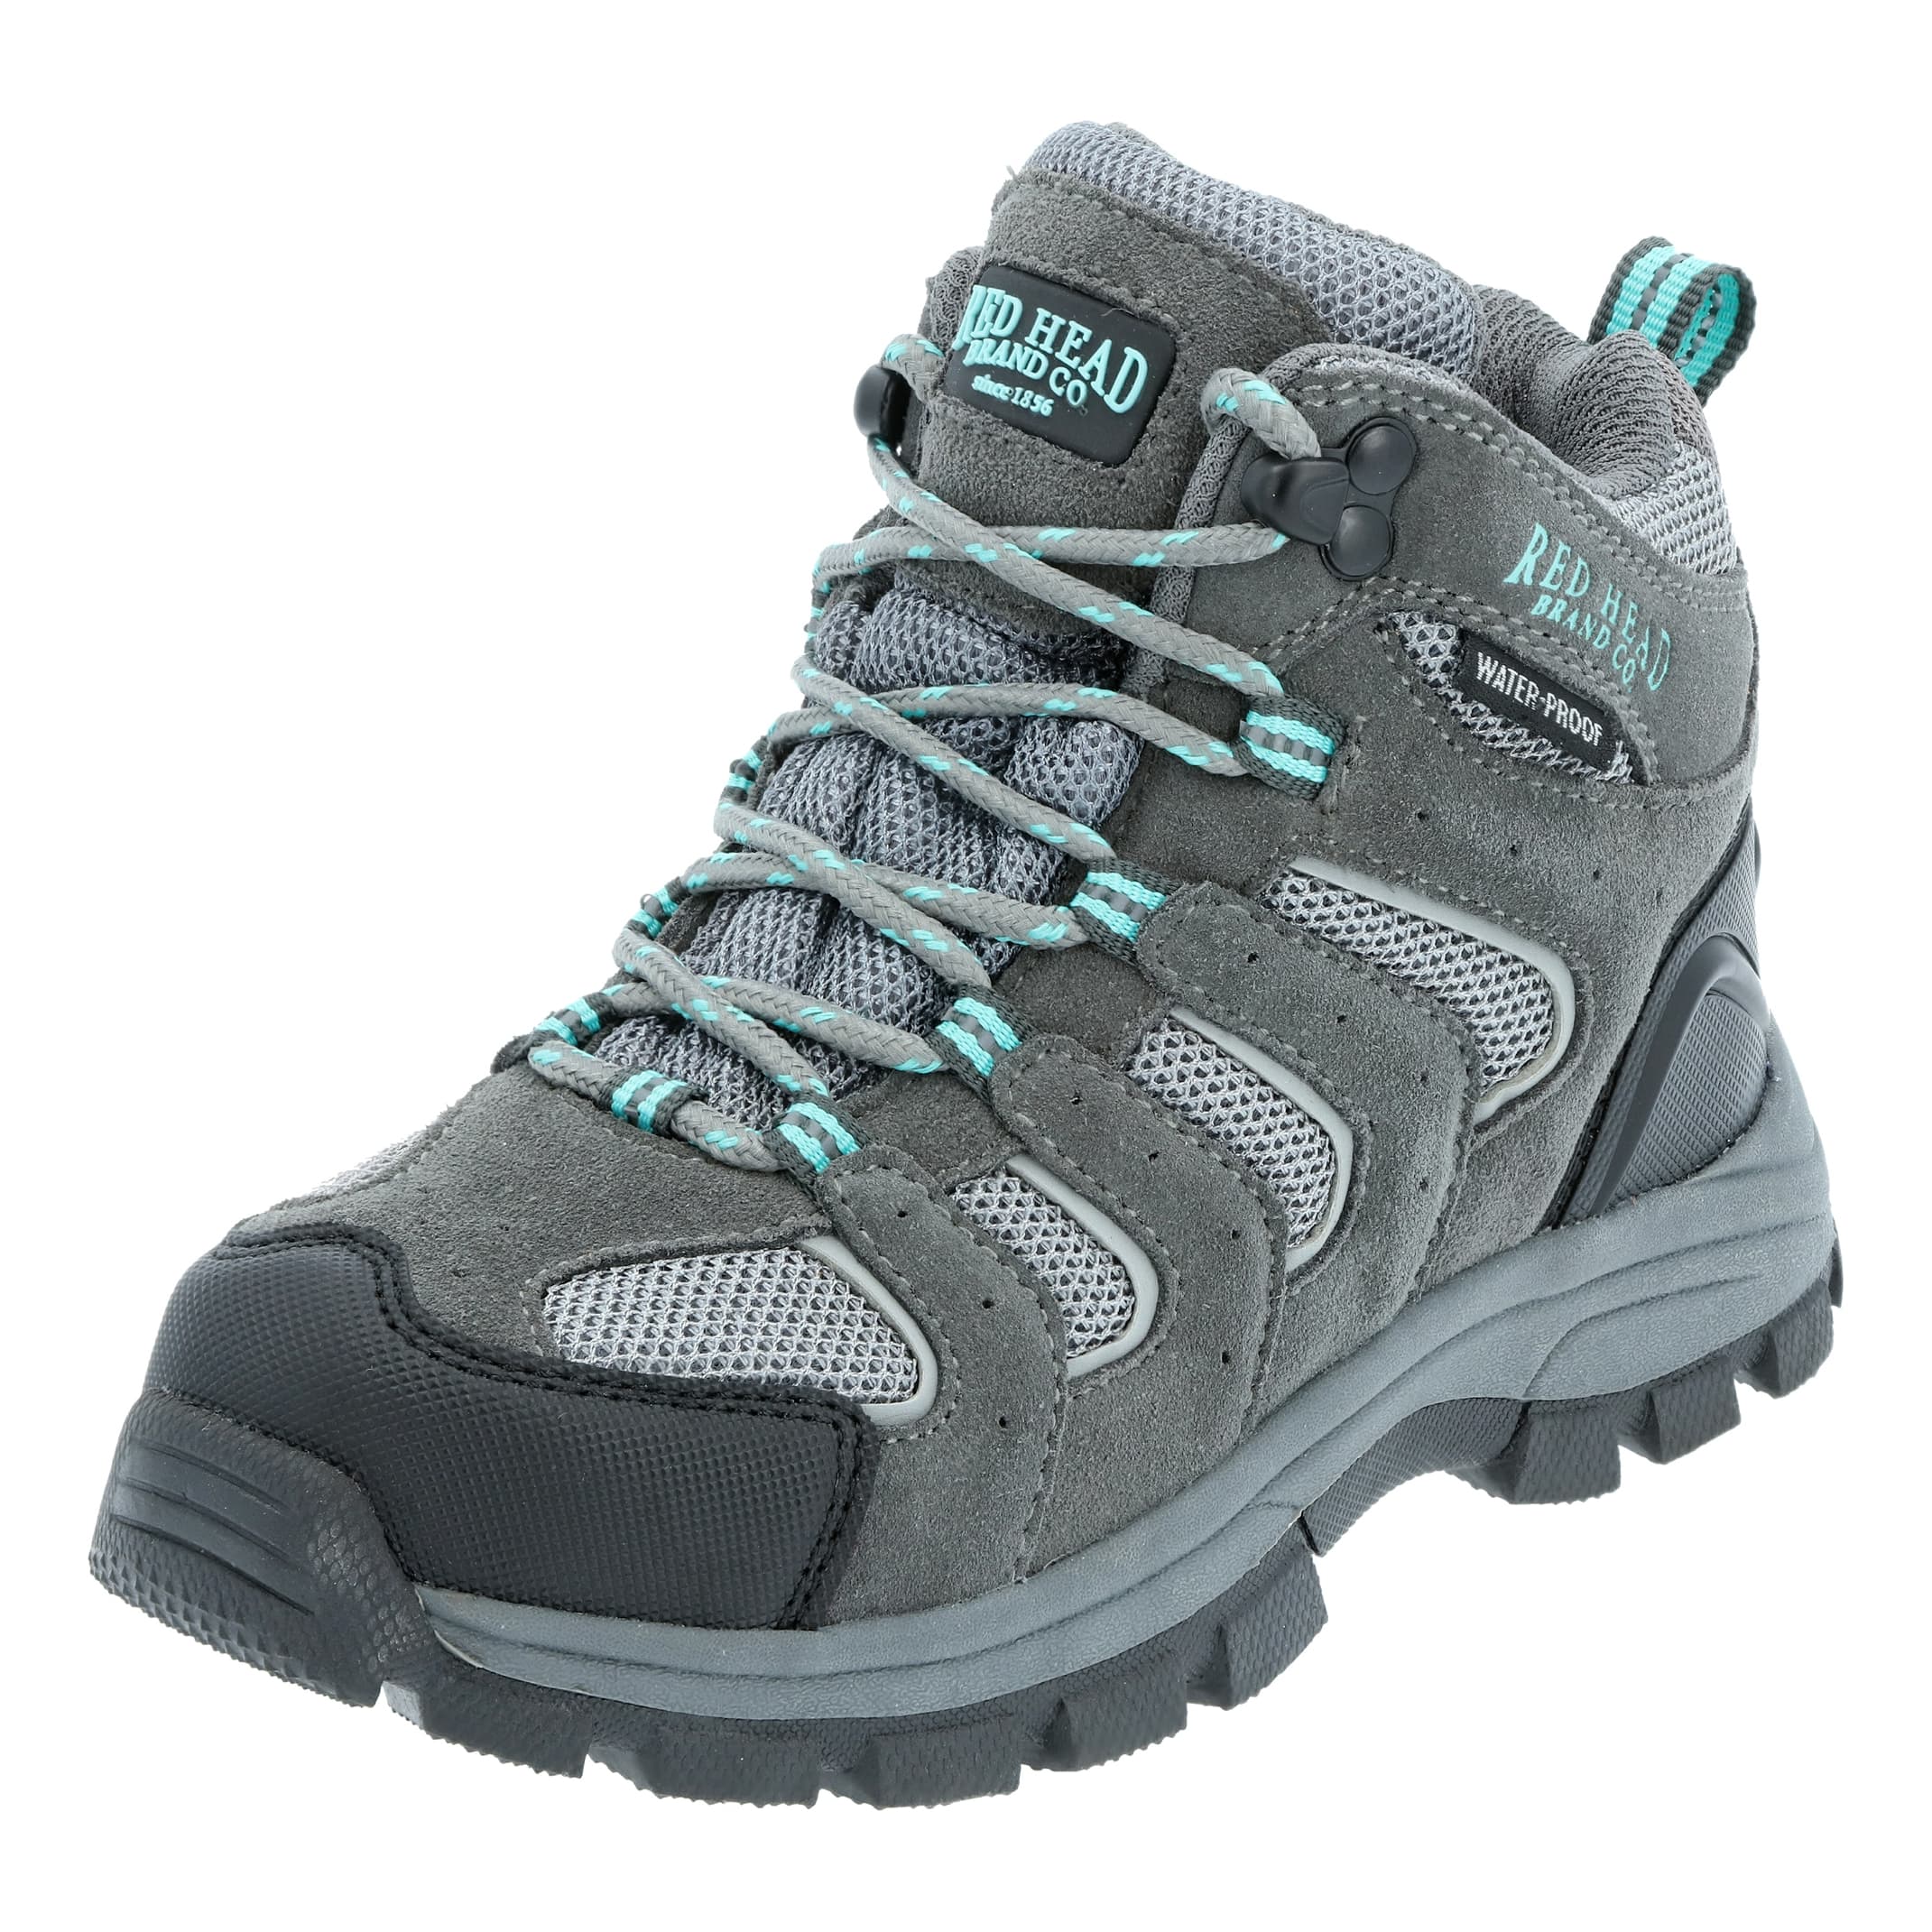 RedHead® Youth Zipline Waterproof Hiking Boots - Grey